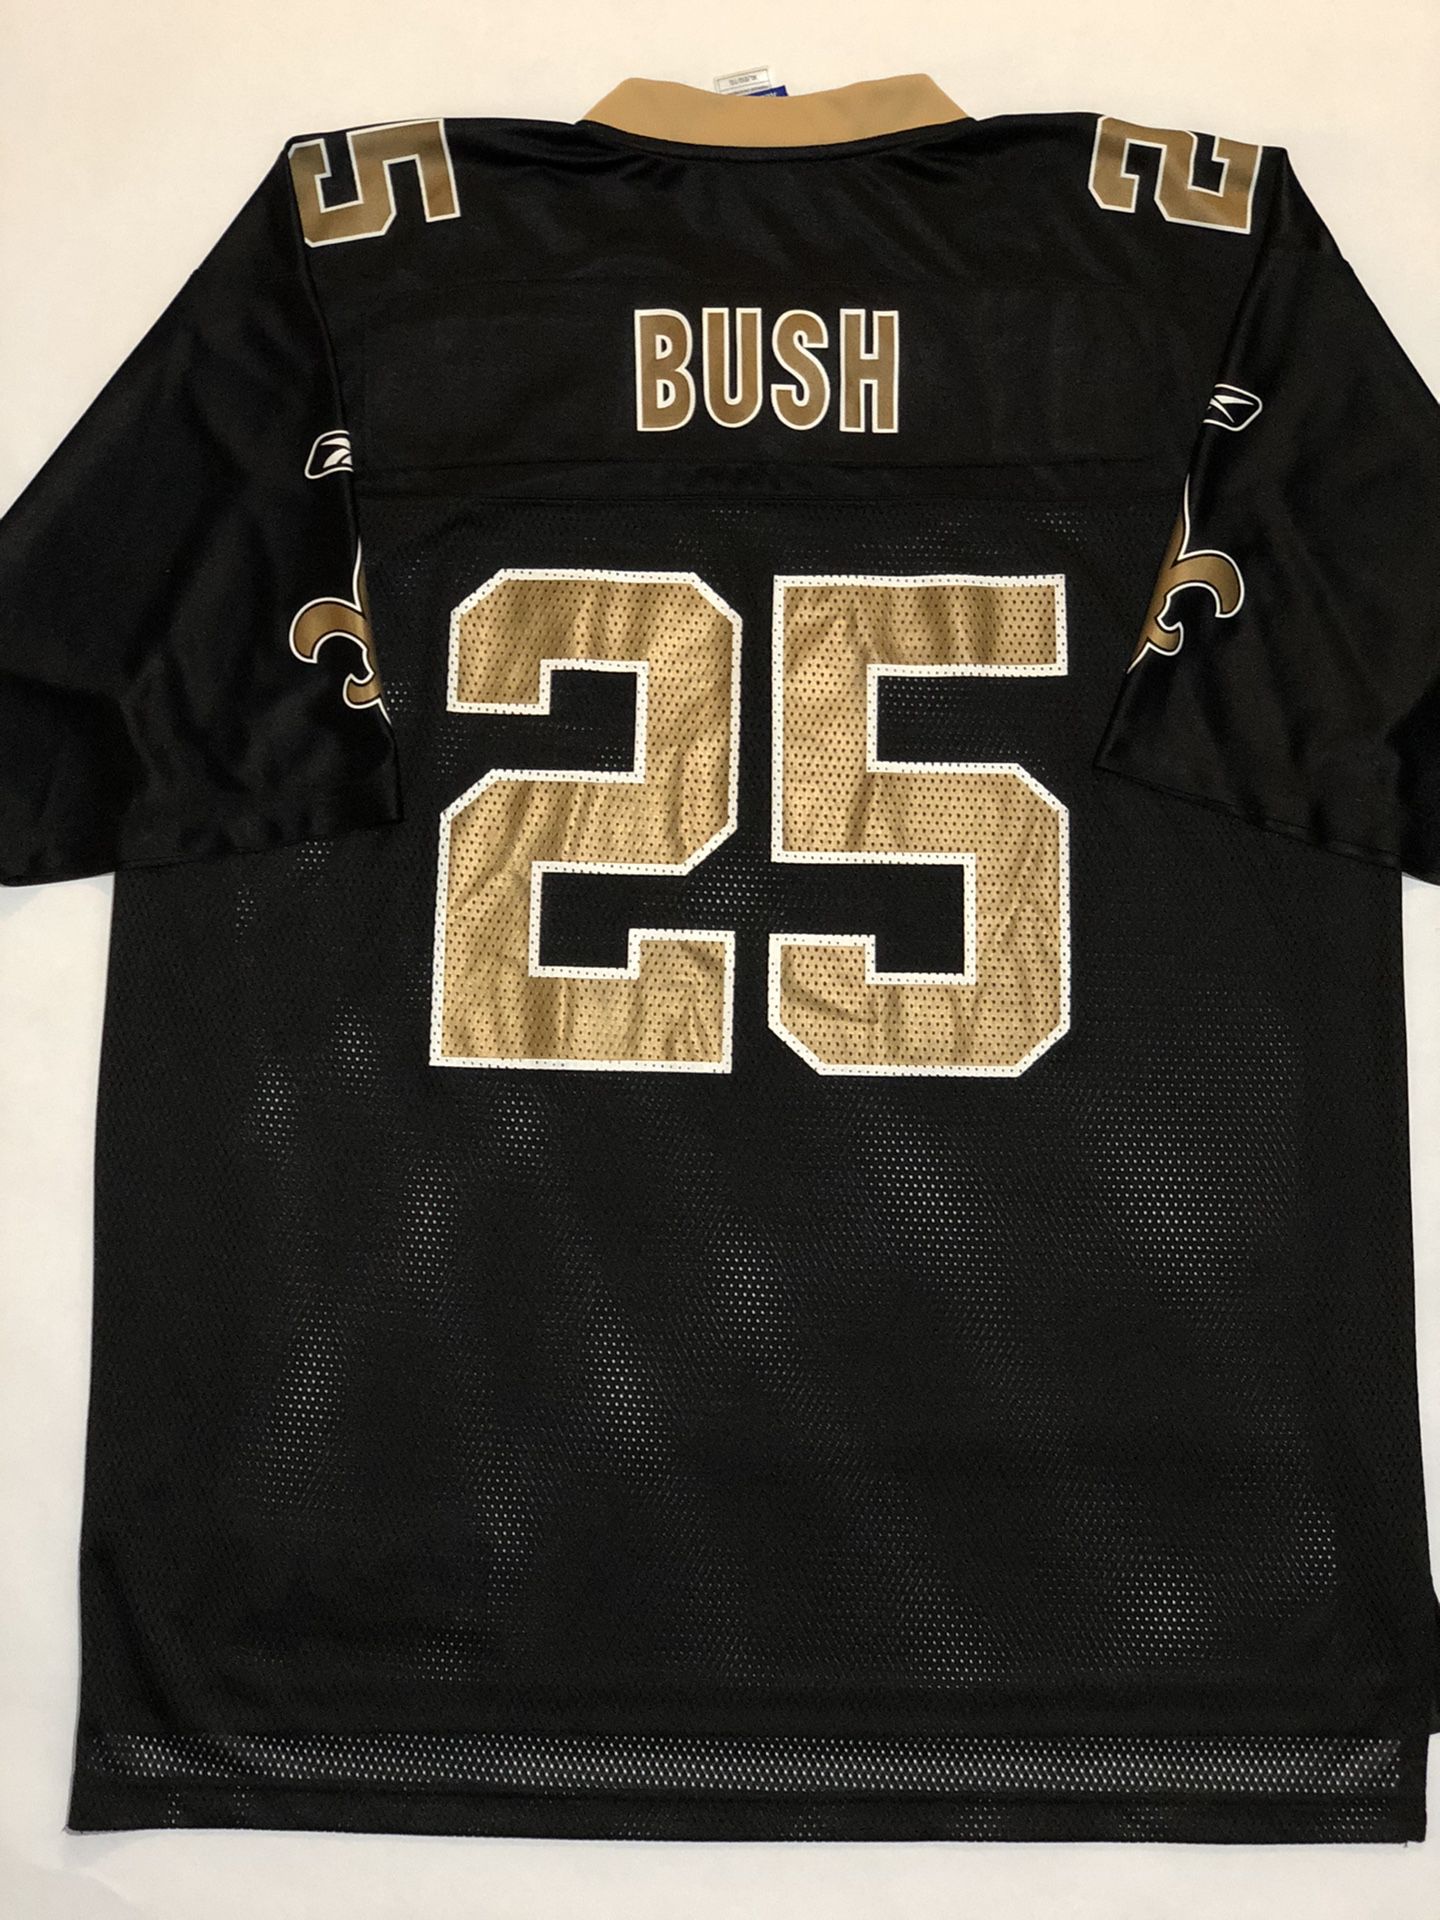 Reggie Bush New Orlean Saints football jersey